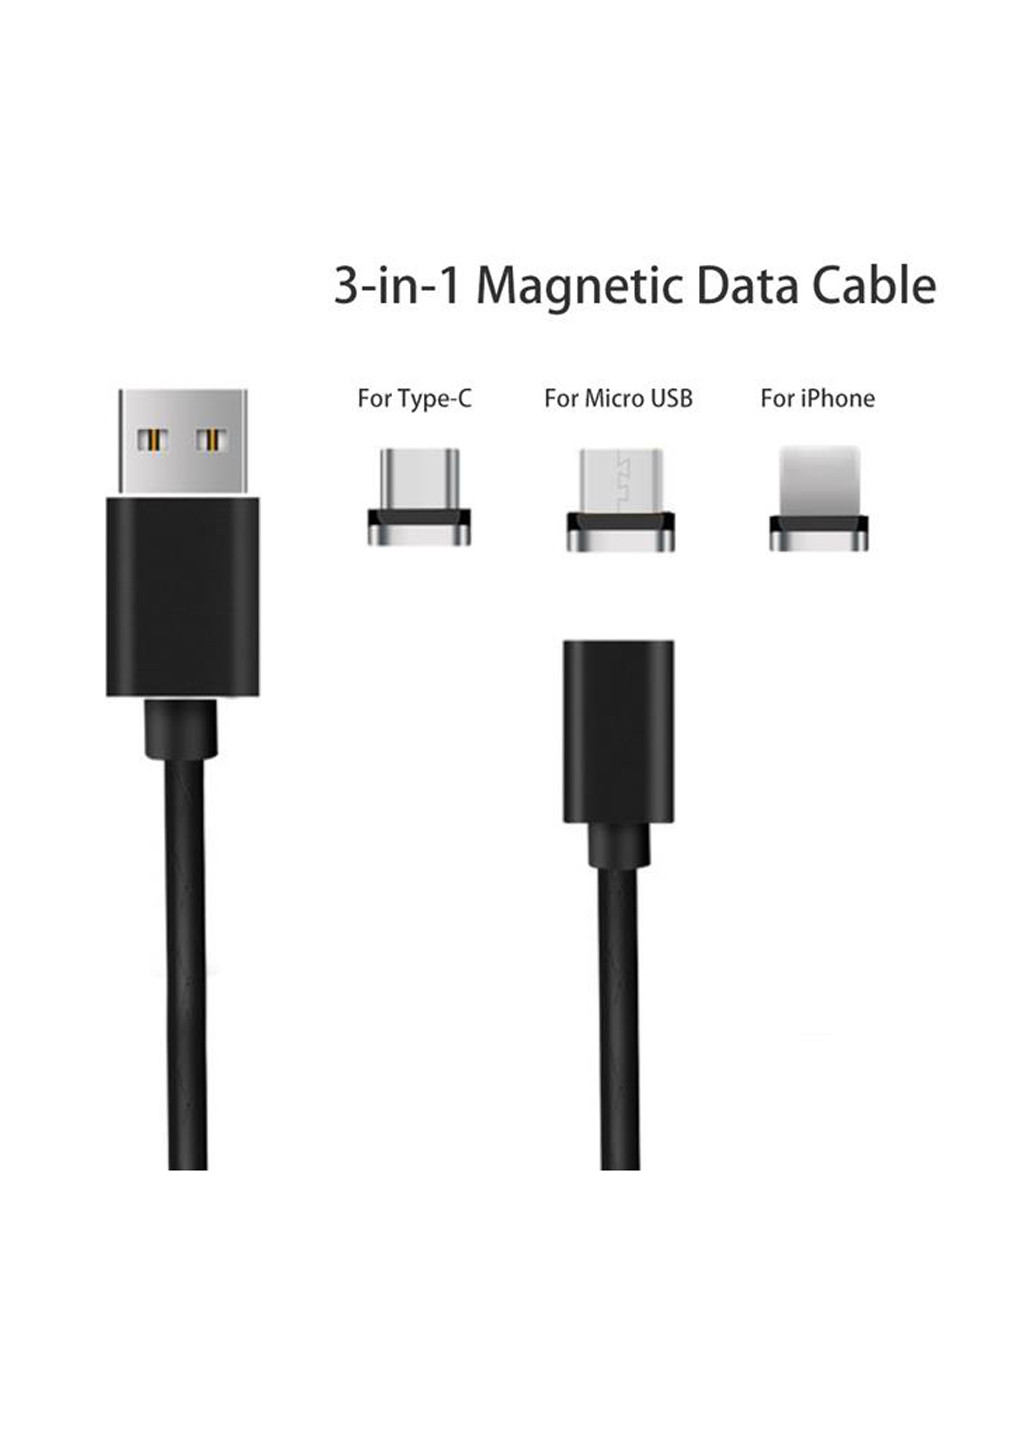 Магнітний кабель USB SC-360 Magneto Leather Black 3 в 1 - Lightning, Micro USB, Type-C 1 м (SC-360MGNT-BK) XoKo sc-360 магнитный кабель k 3 в 1- lightning, micro usb, type-c 1 м (132572840)